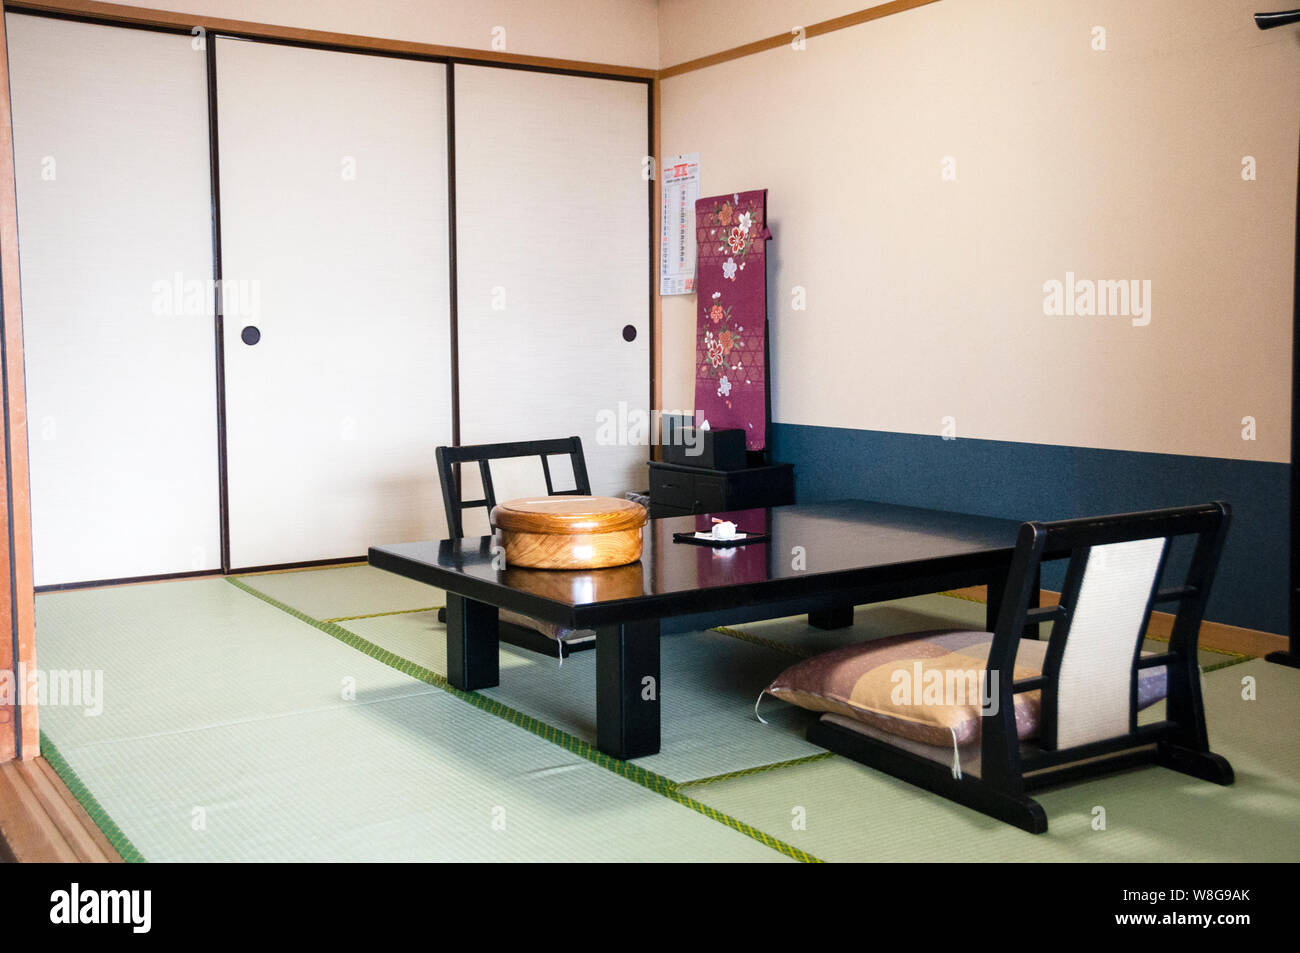 https://c8.alamy.com/comp/W8G9AK/traditional-japanese-tea-service-in-hotel-room-in-hakone-japan-includes-zabuton-cushions-and-a-chabudai-table-with-zaisu-or-legless-chair-W8G9AK.jpg